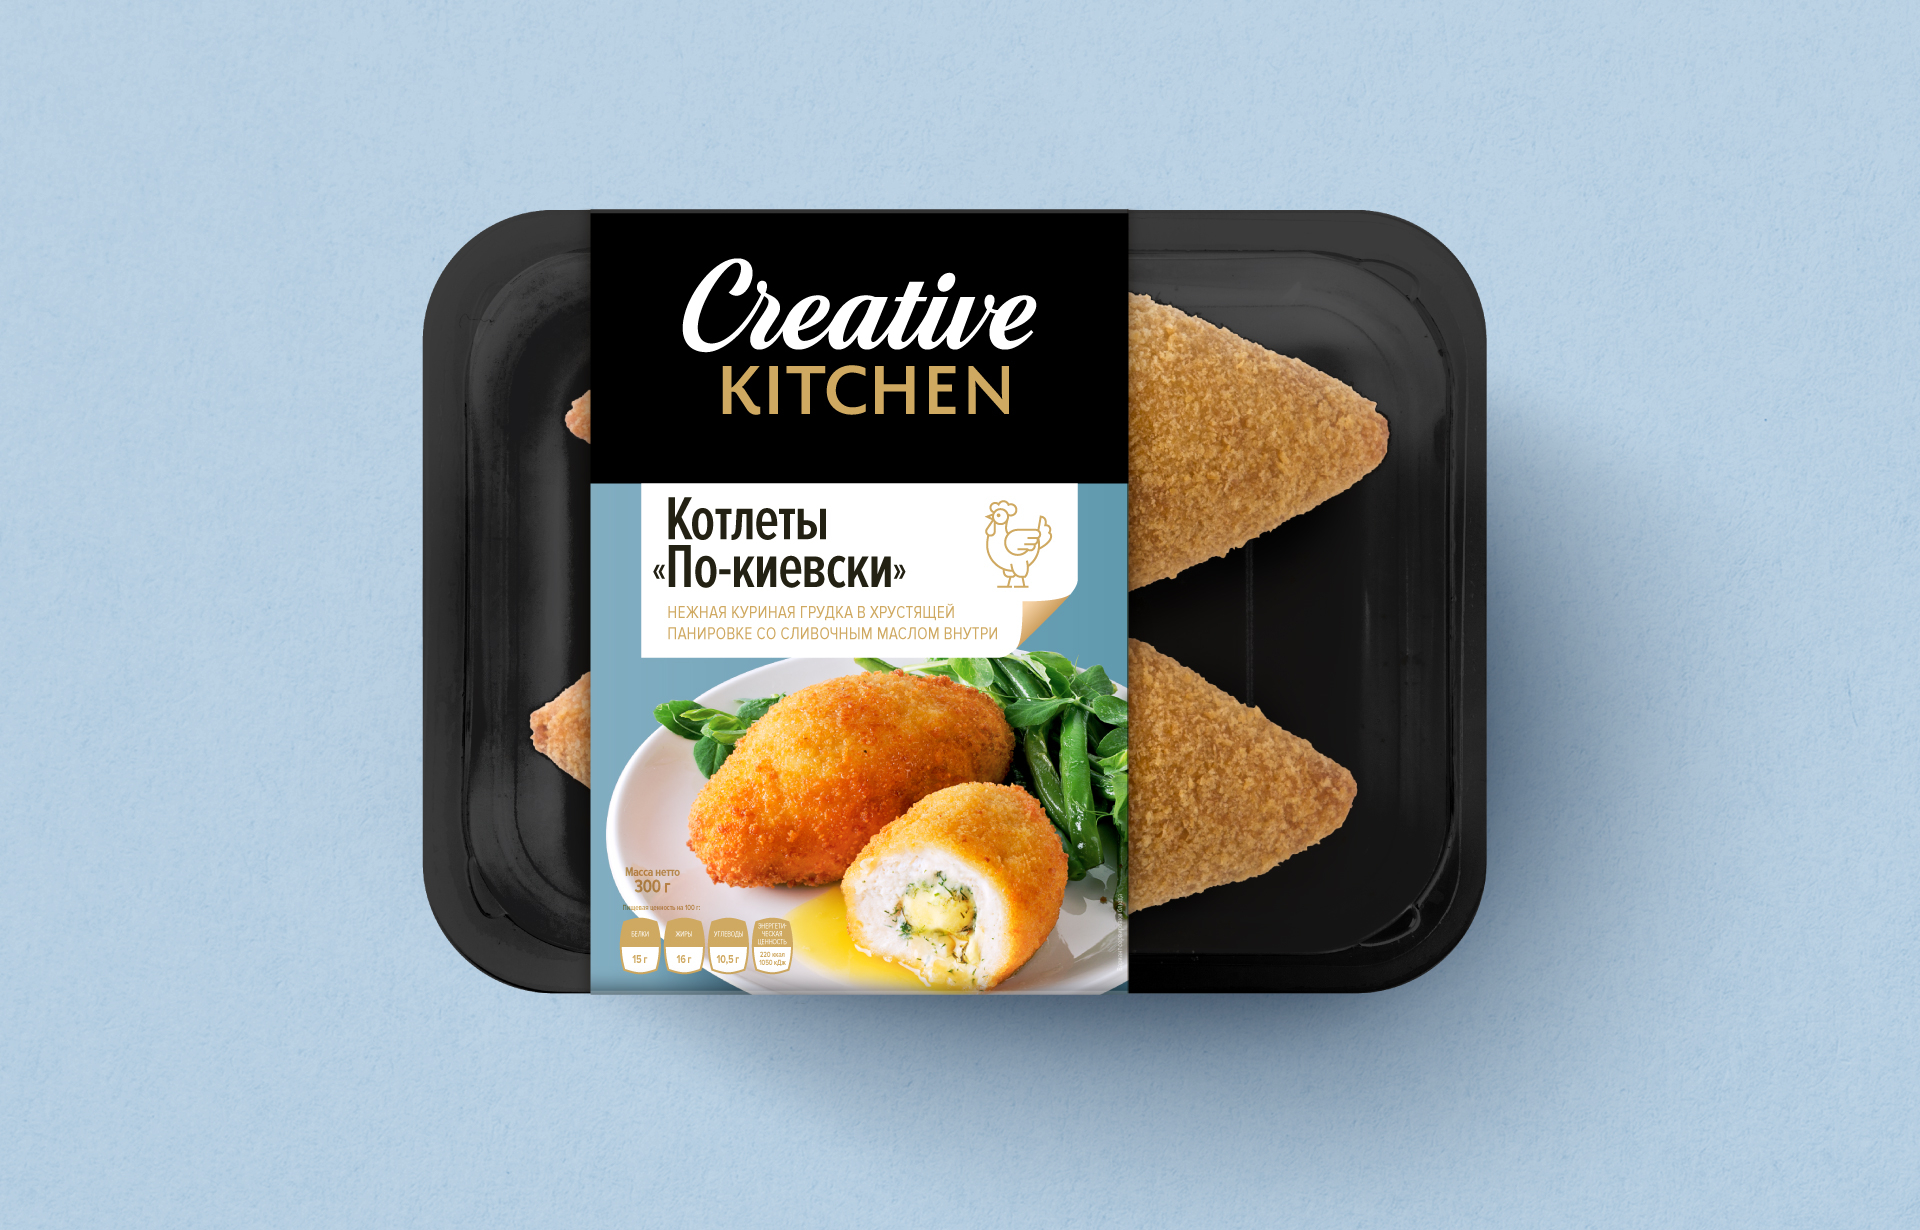 Дизайн упаковки котлет Creative Kitchen